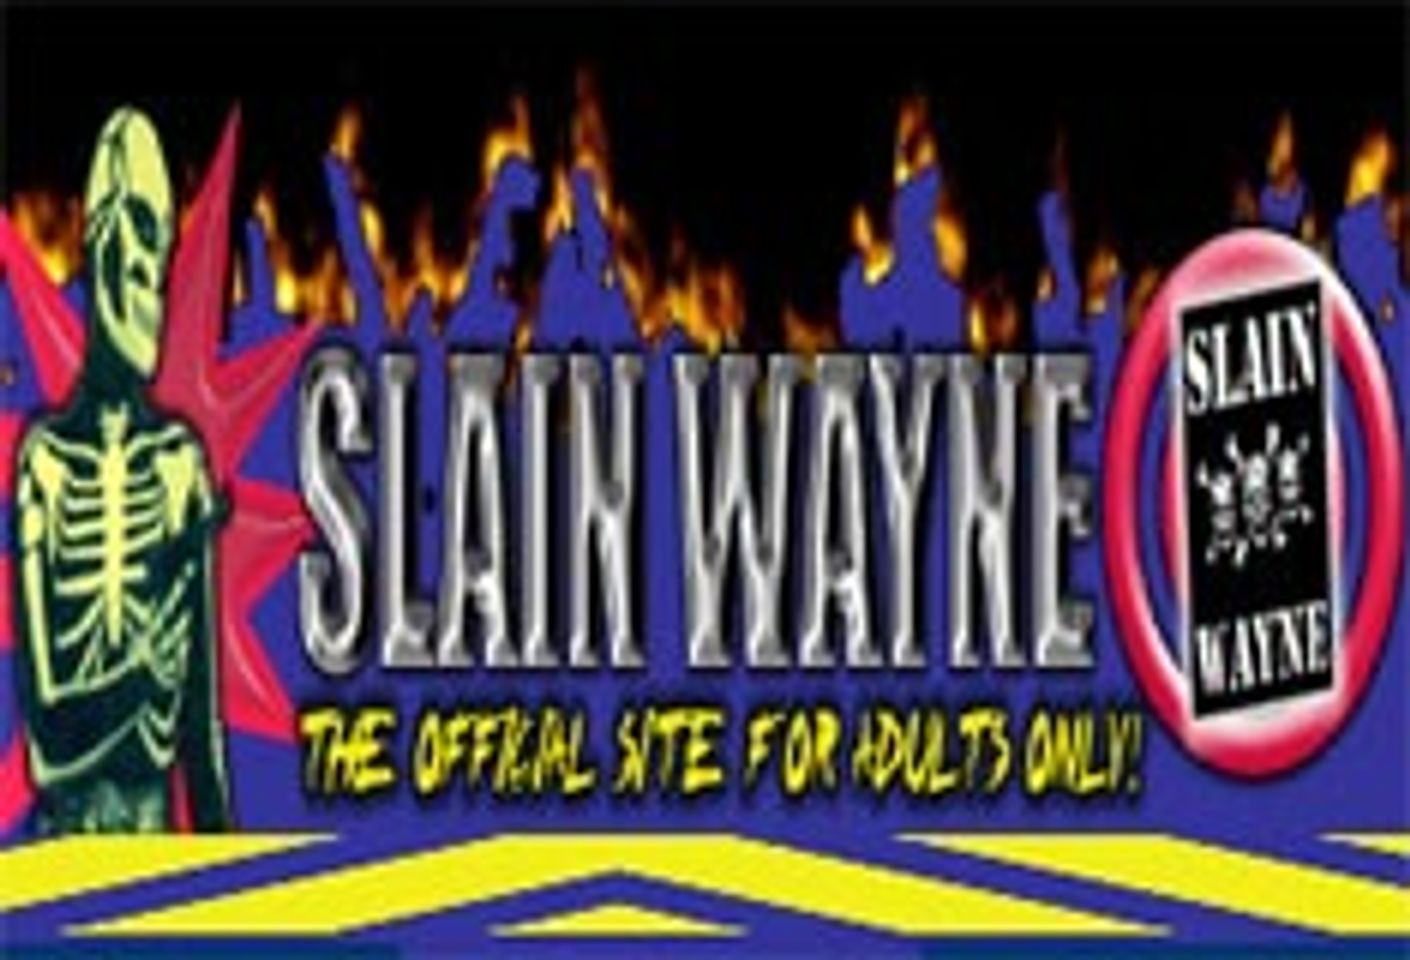 Slainwayne.com Makes Its Action-Packed Debut